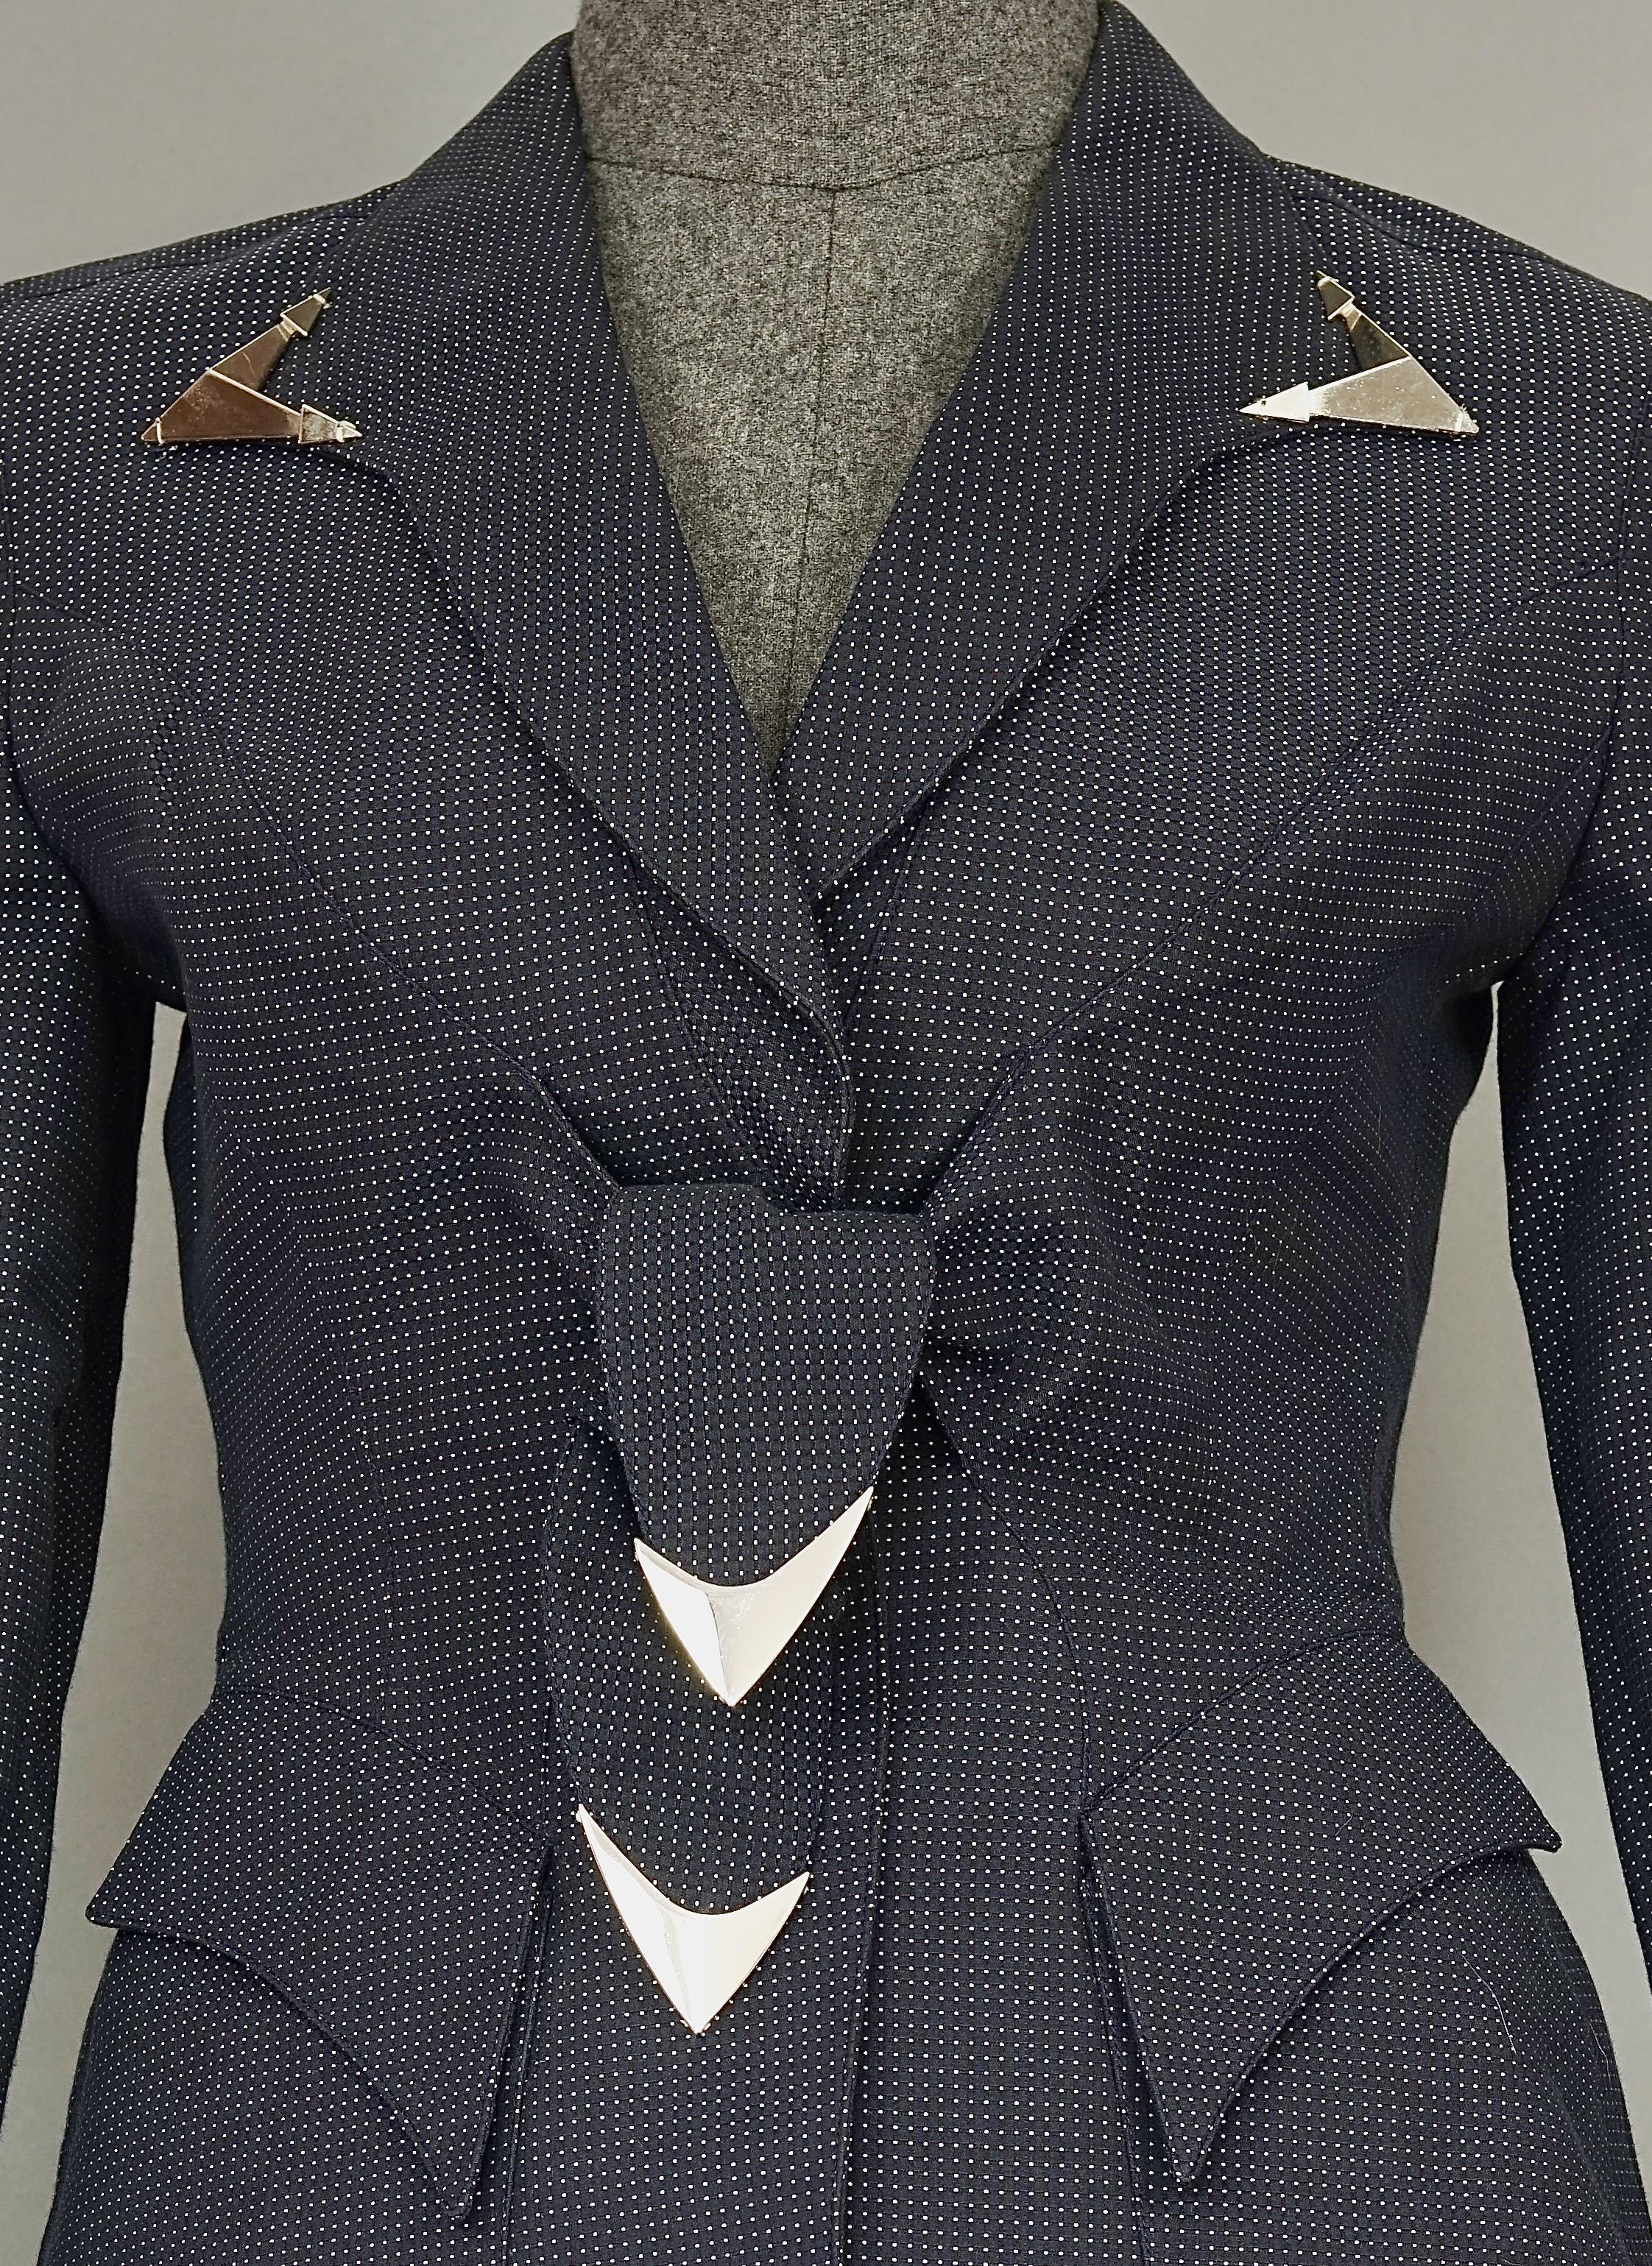 Vintage THIERRY MUGLER Metal Appliques Bow Polka Dot Jacket Skirt Suit 1